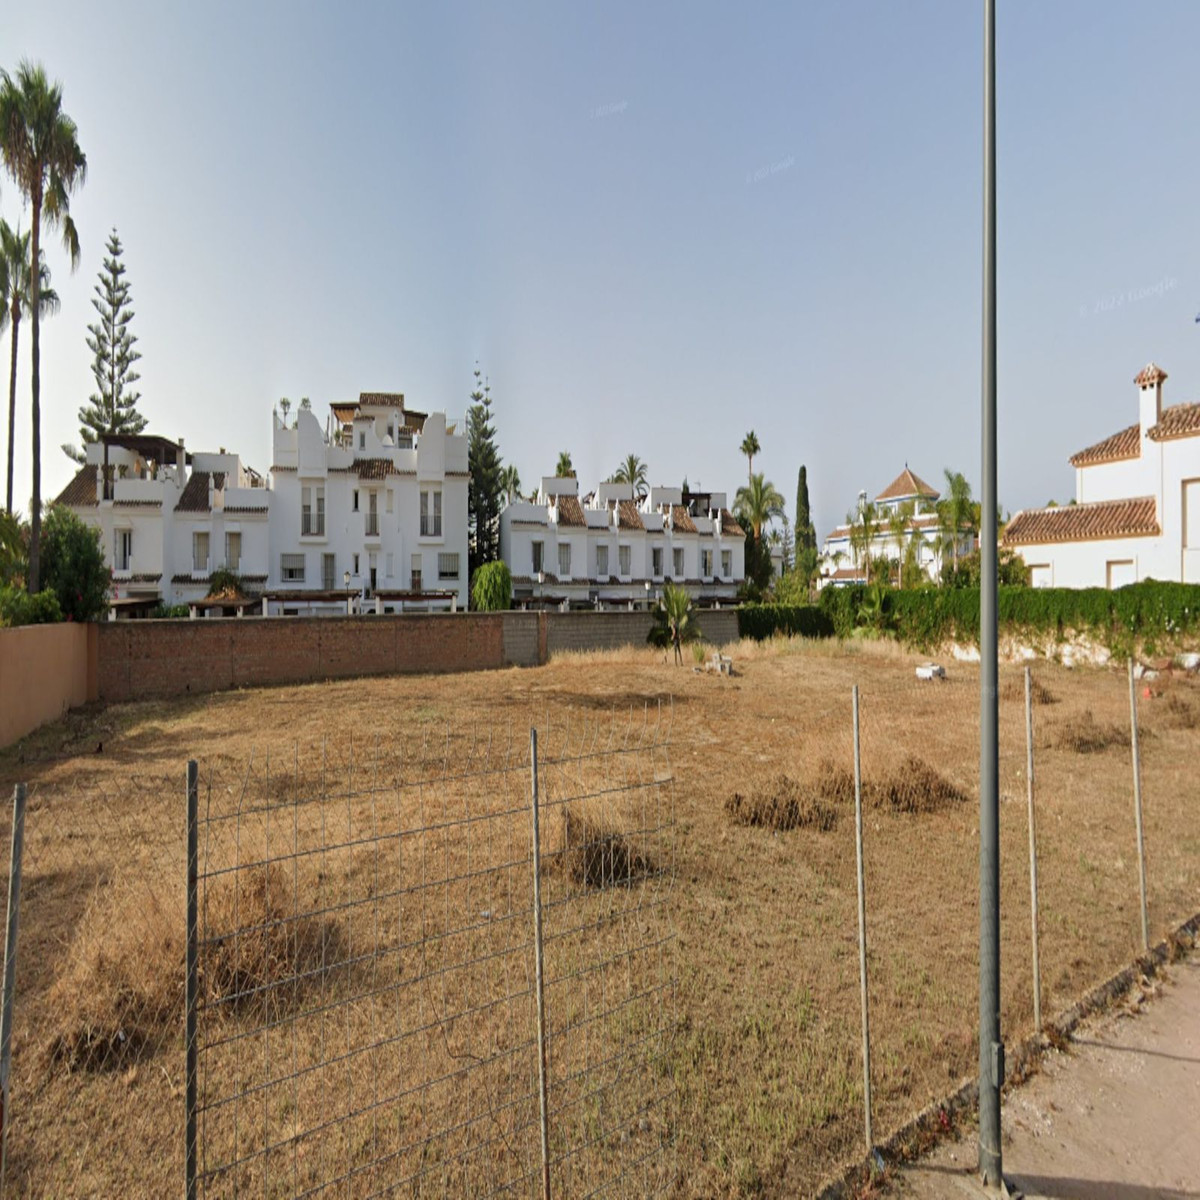 						Plot  Residential
													for sale 
																			 in San Pedro de Alcántara
					